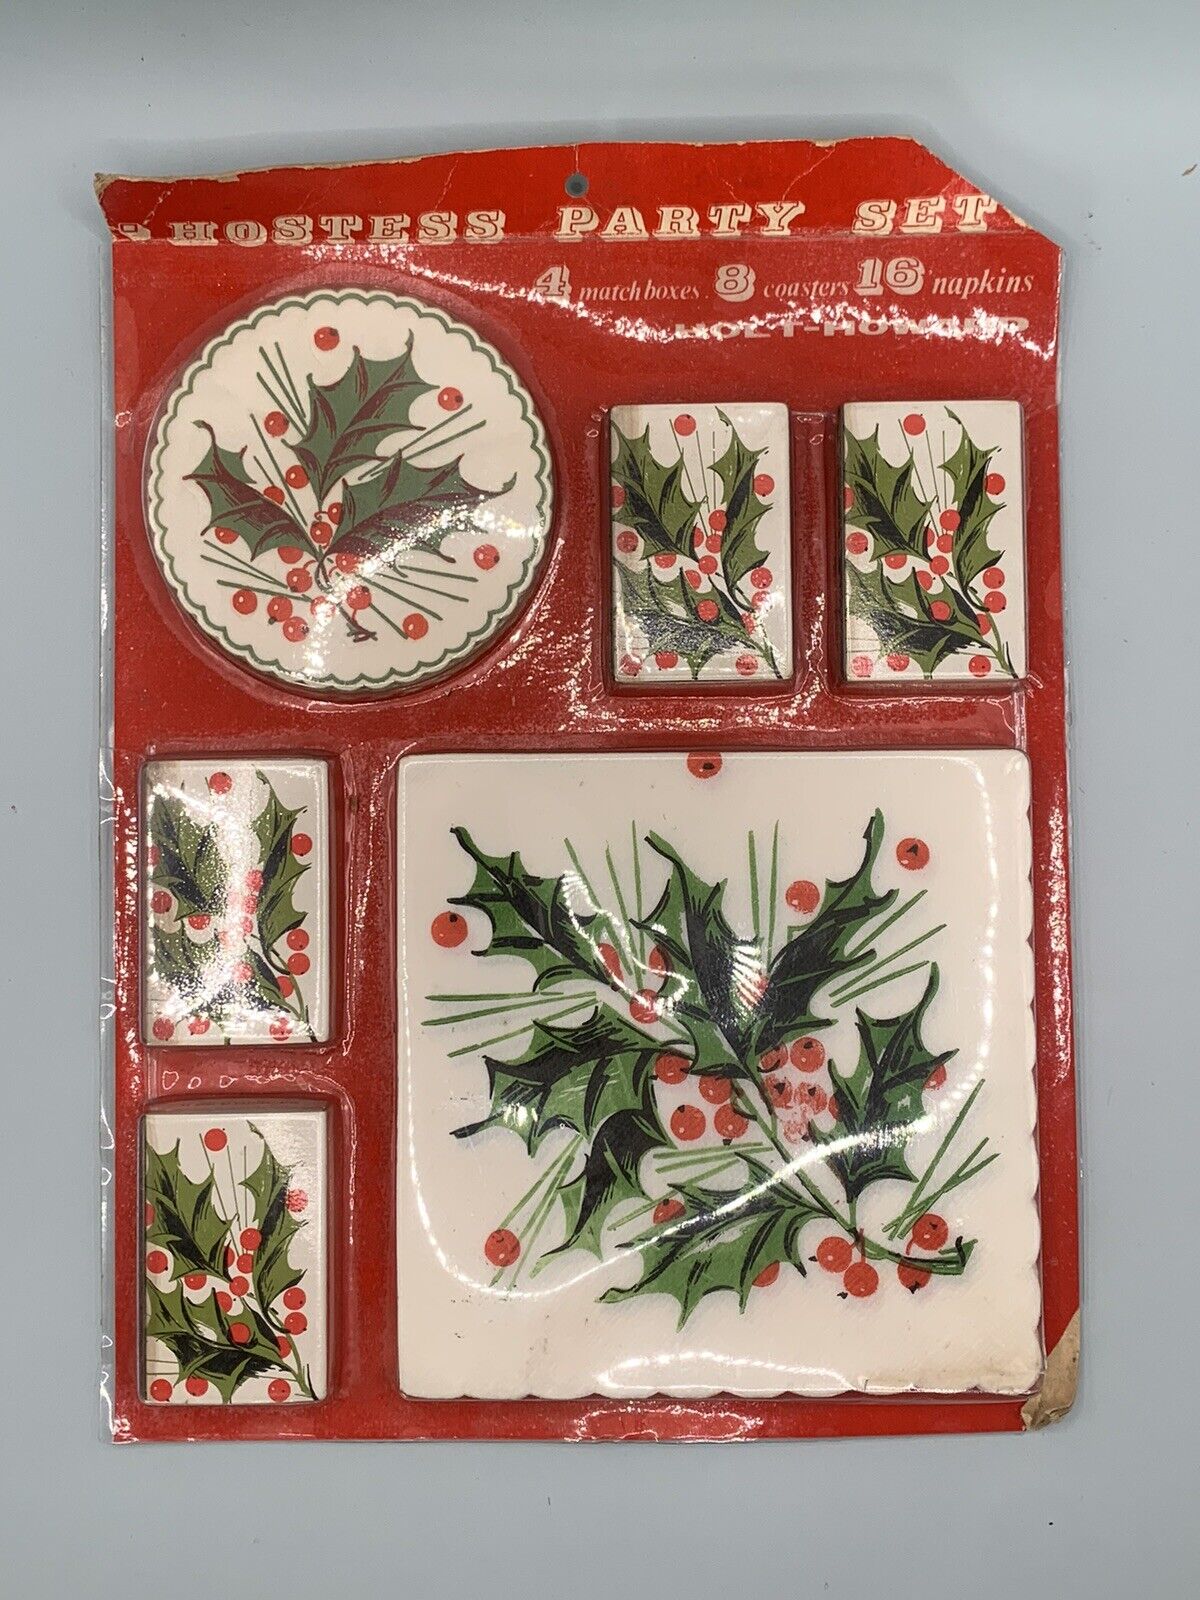 Vintage Hostess Party Set Mistletoe Matches Coasters Napkins Mid-Century Parties